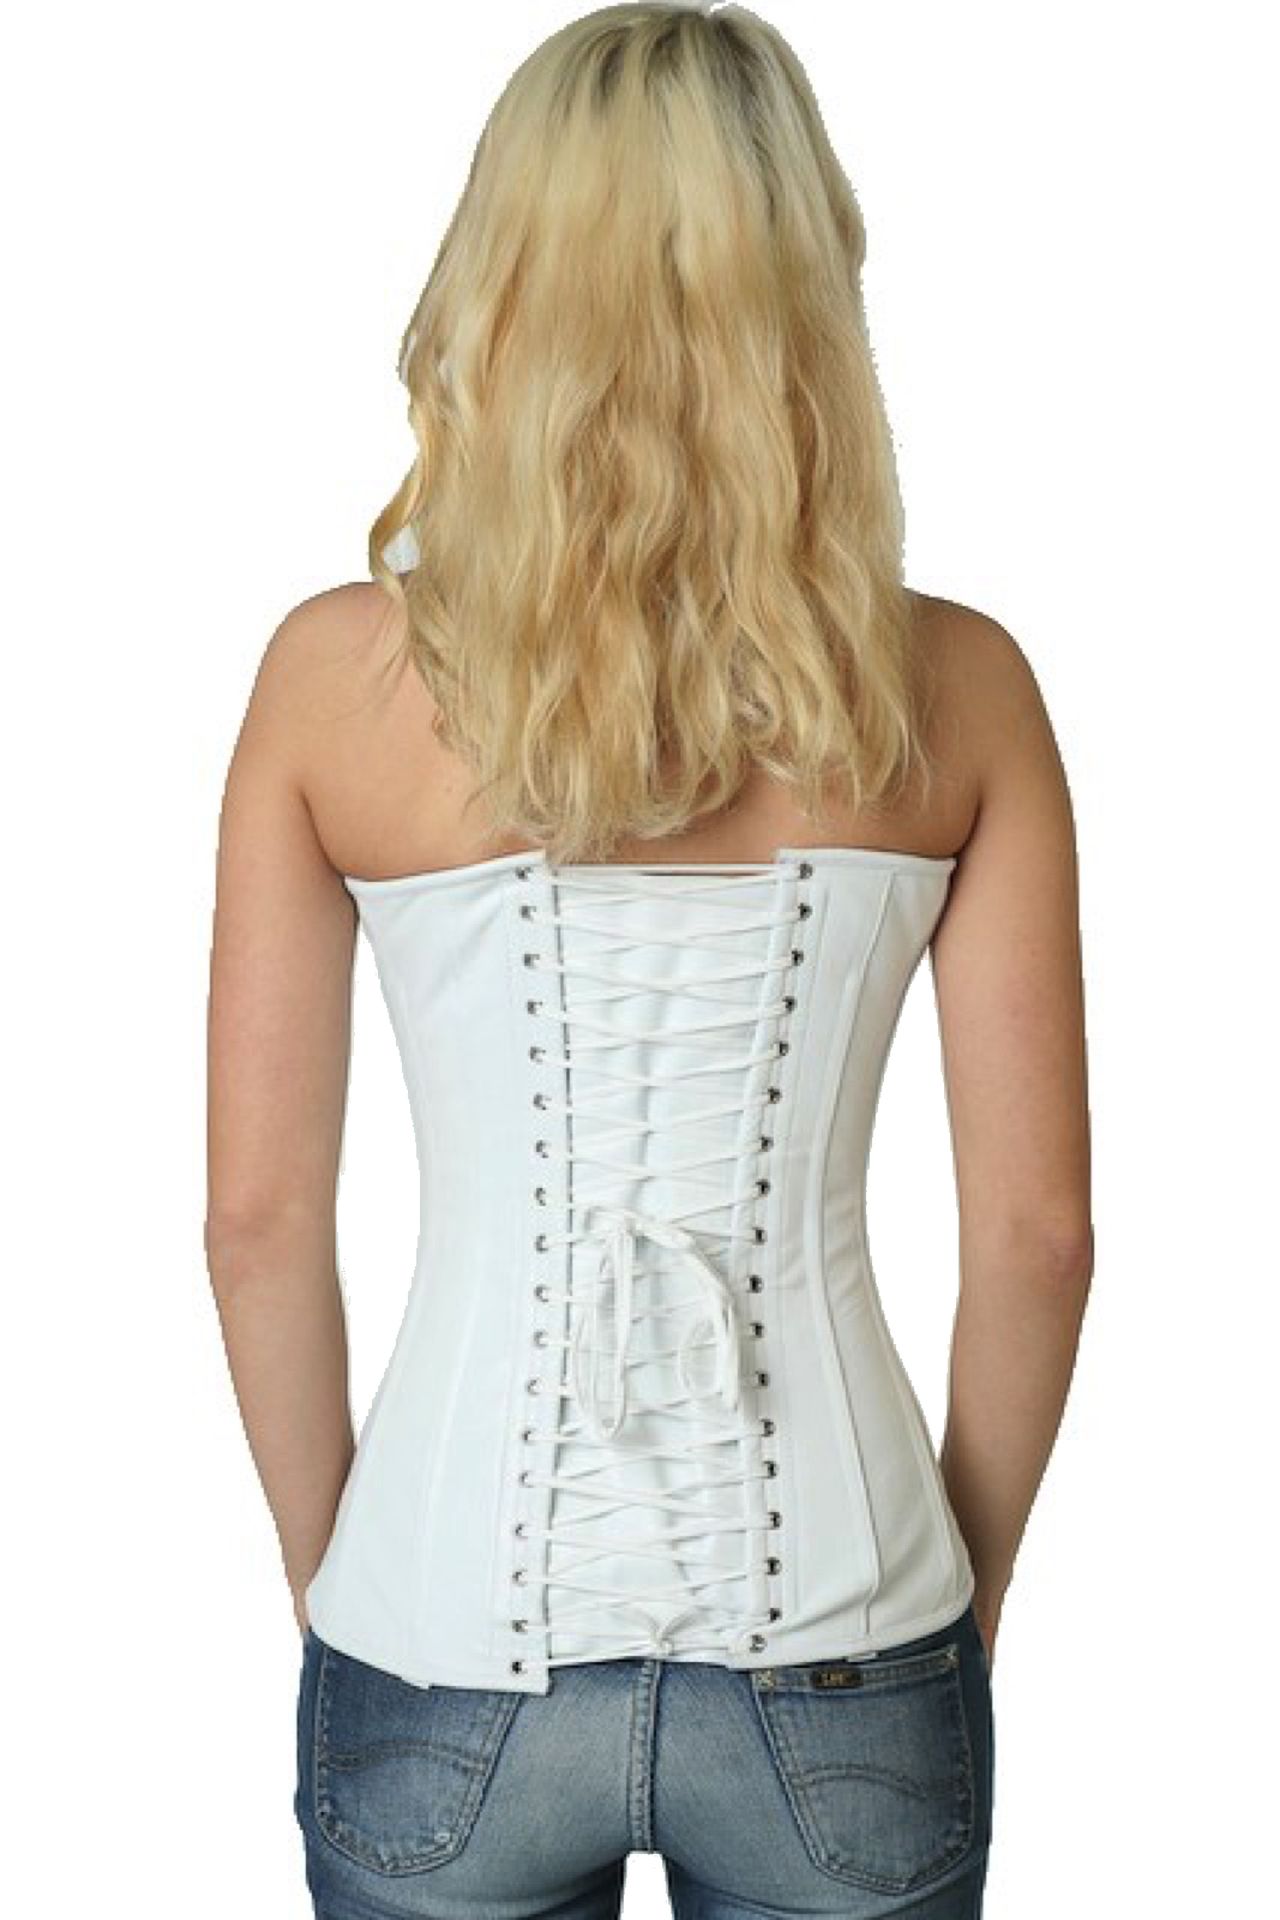 Leren corset wit volborst Korset ly21